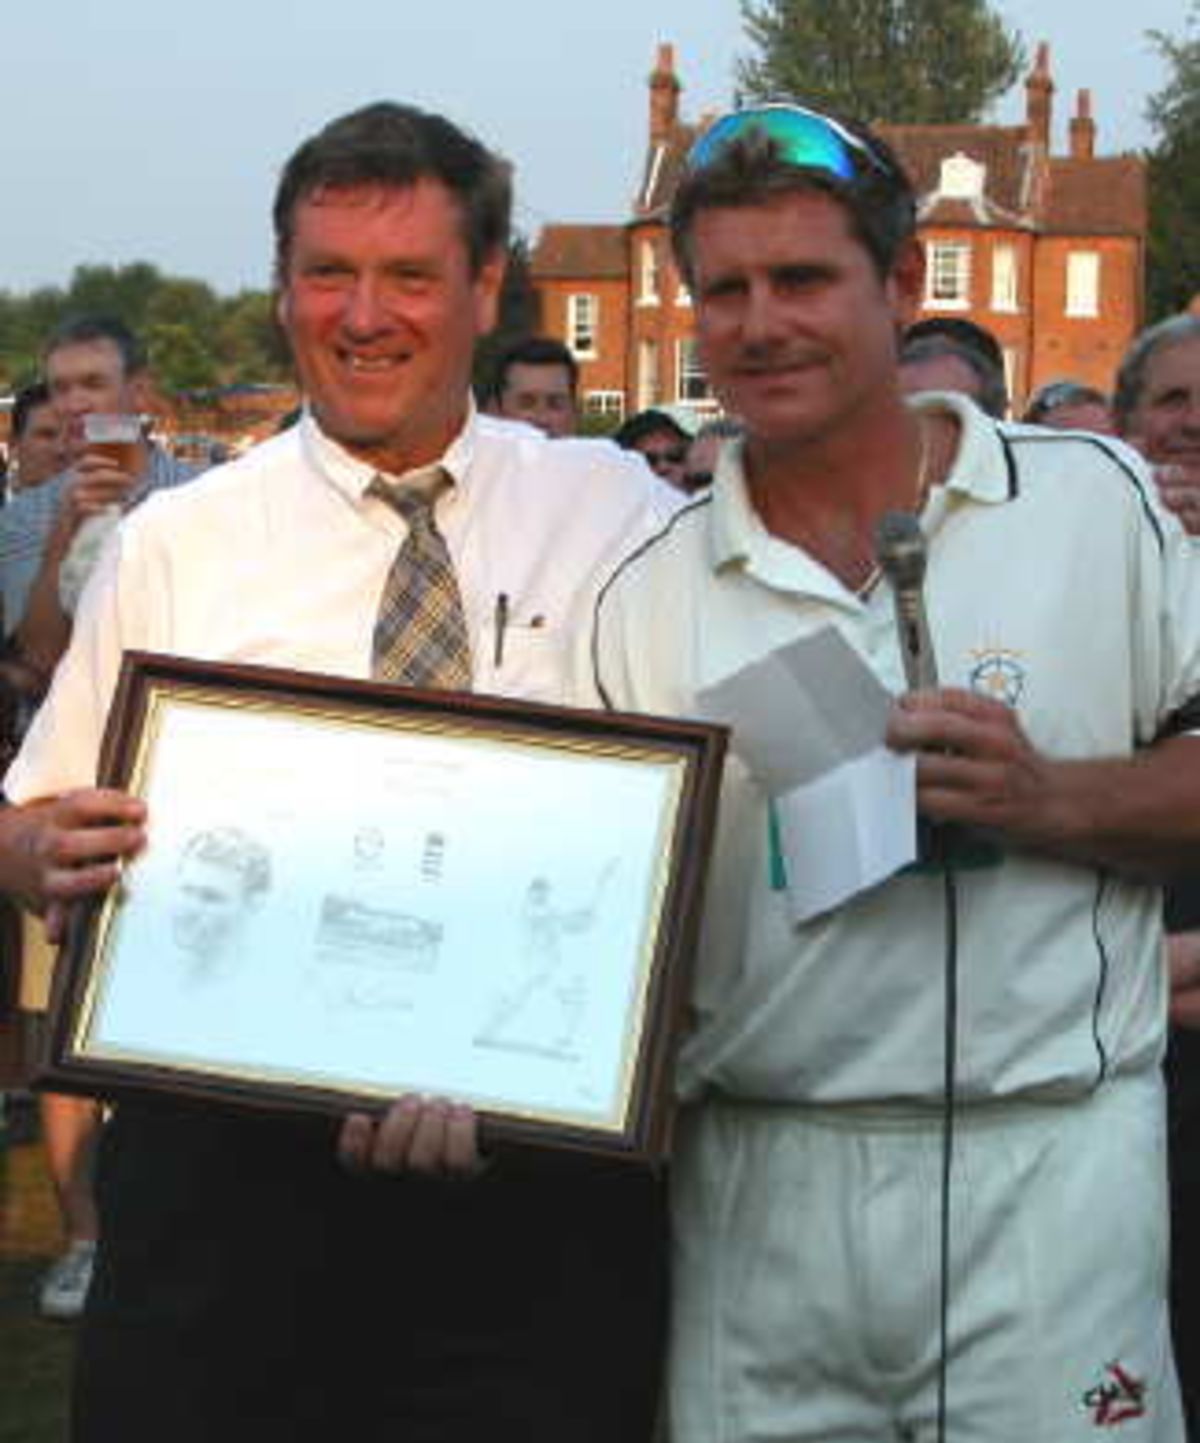 Bob Jeavons-Fellows, President of Hartley Wintney Cricket Club receives a Testimonial Print in gratitude from Robin Smith